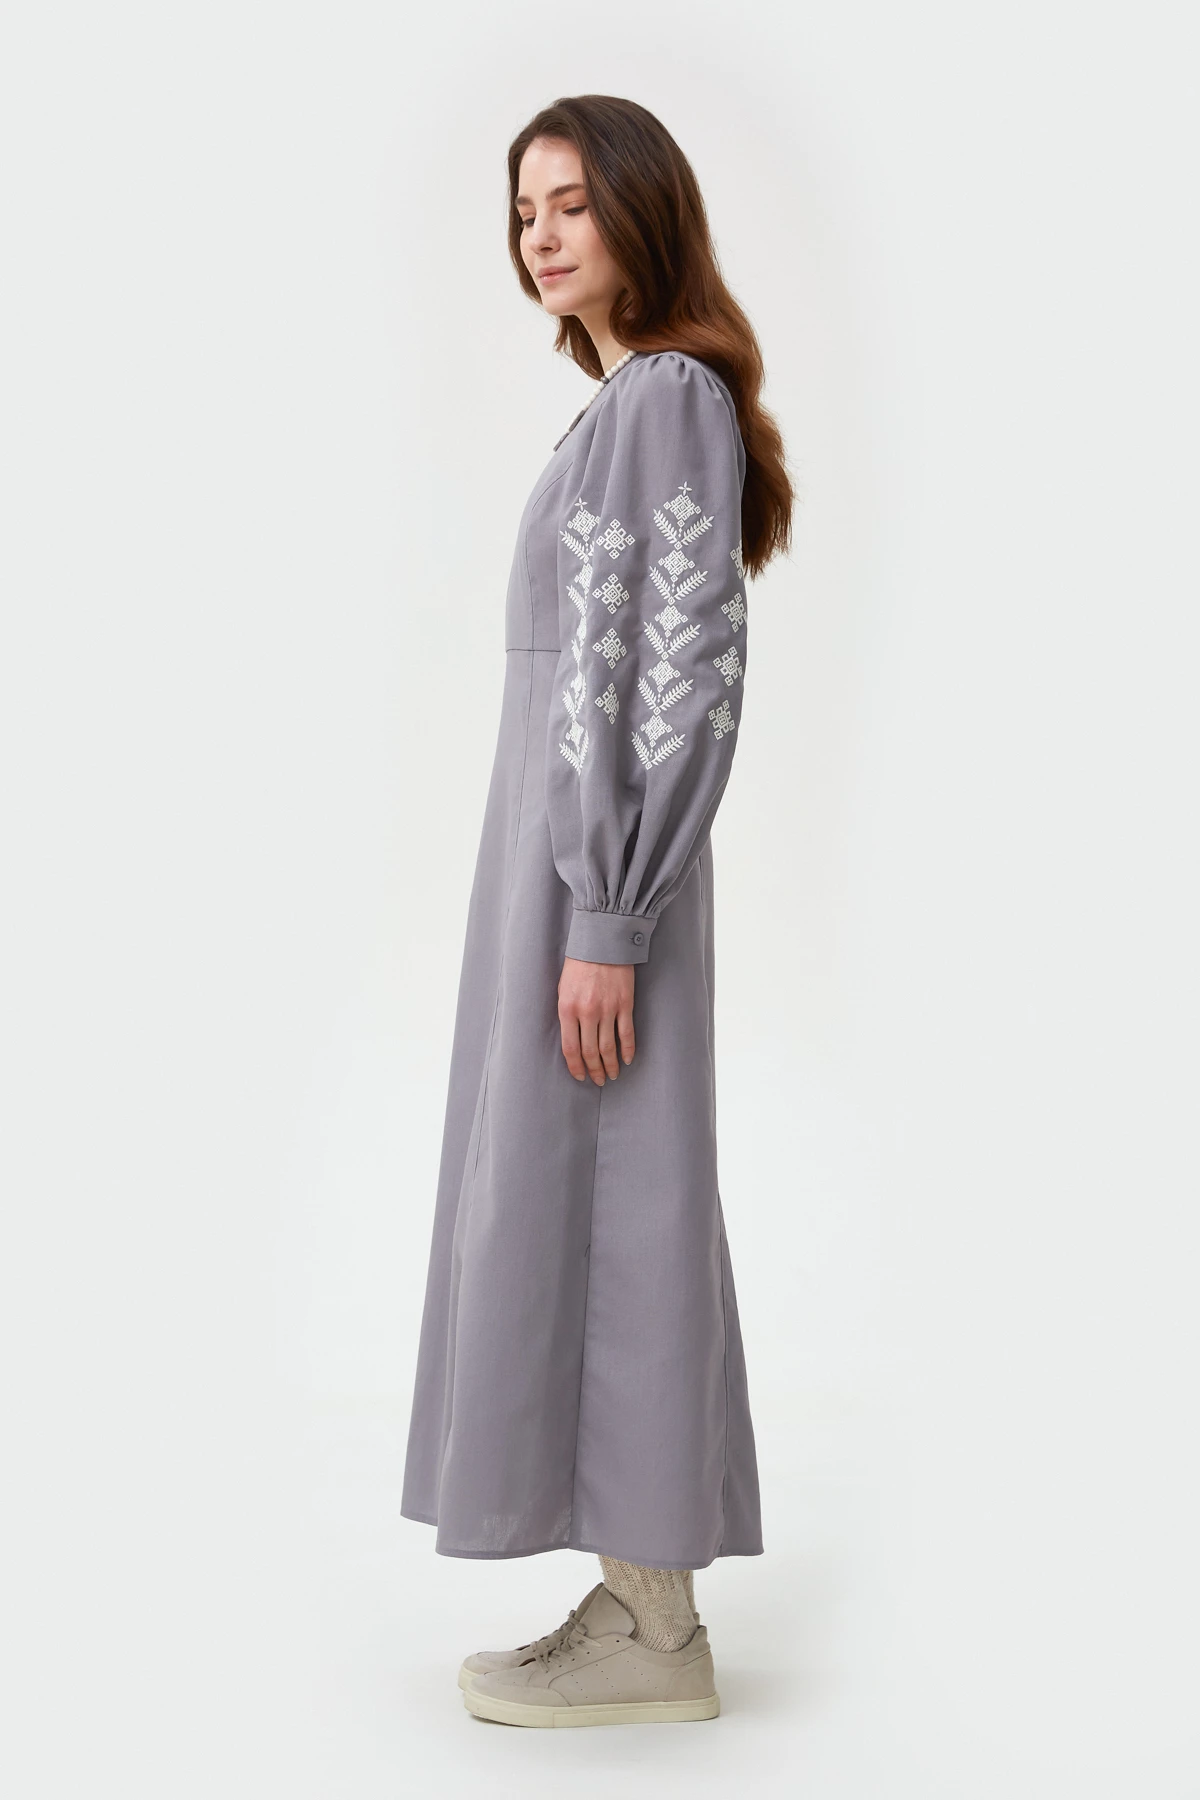 Grey linen vyshyvanka dress with rhombus embroidery, photo 2